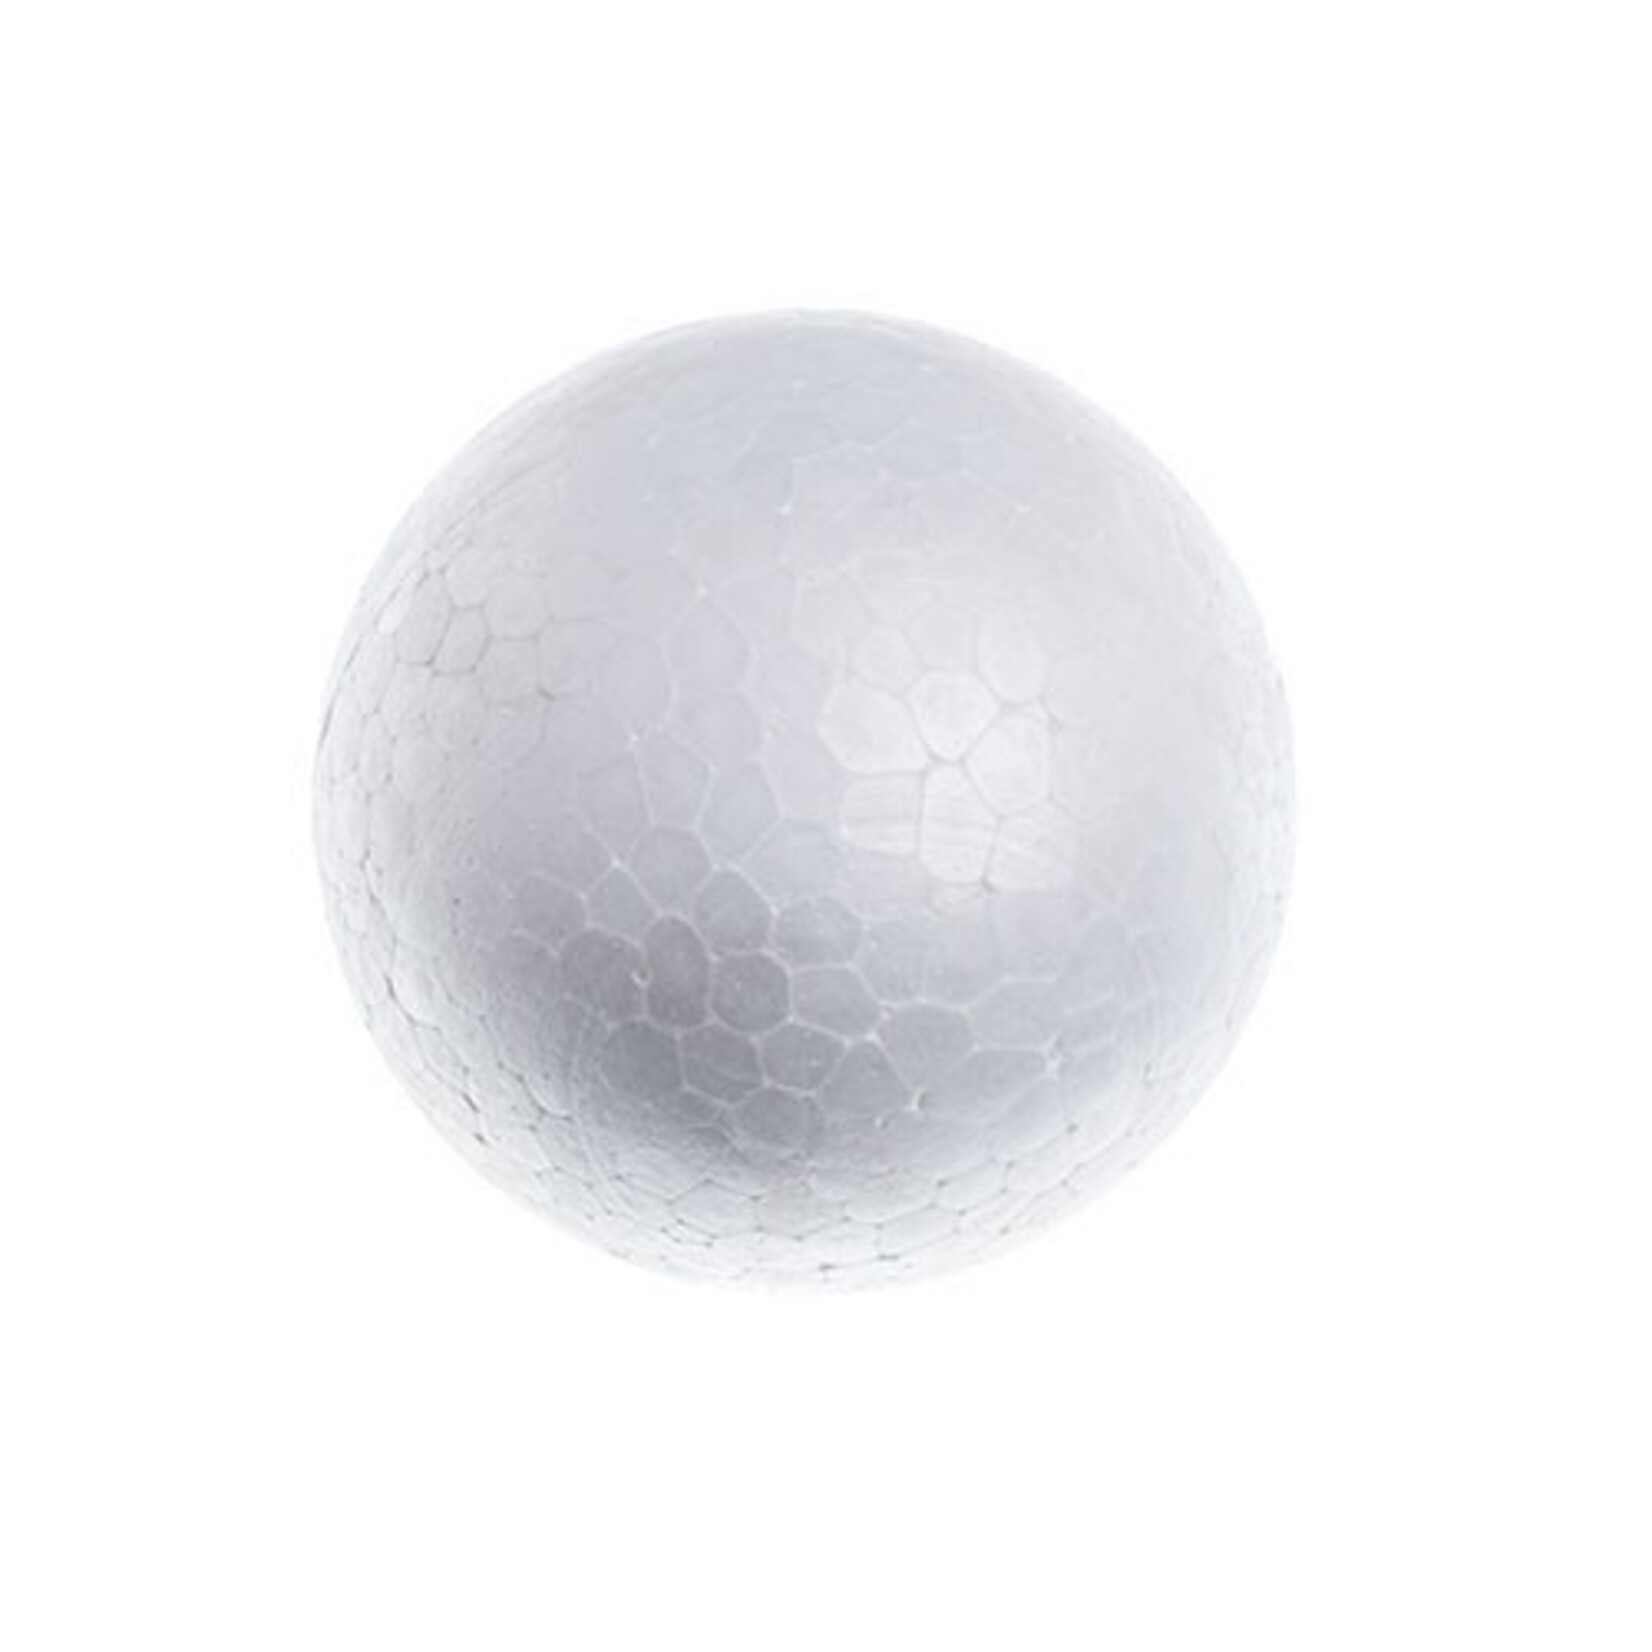 Dylite Styrofoam Ball White 7 inches Round